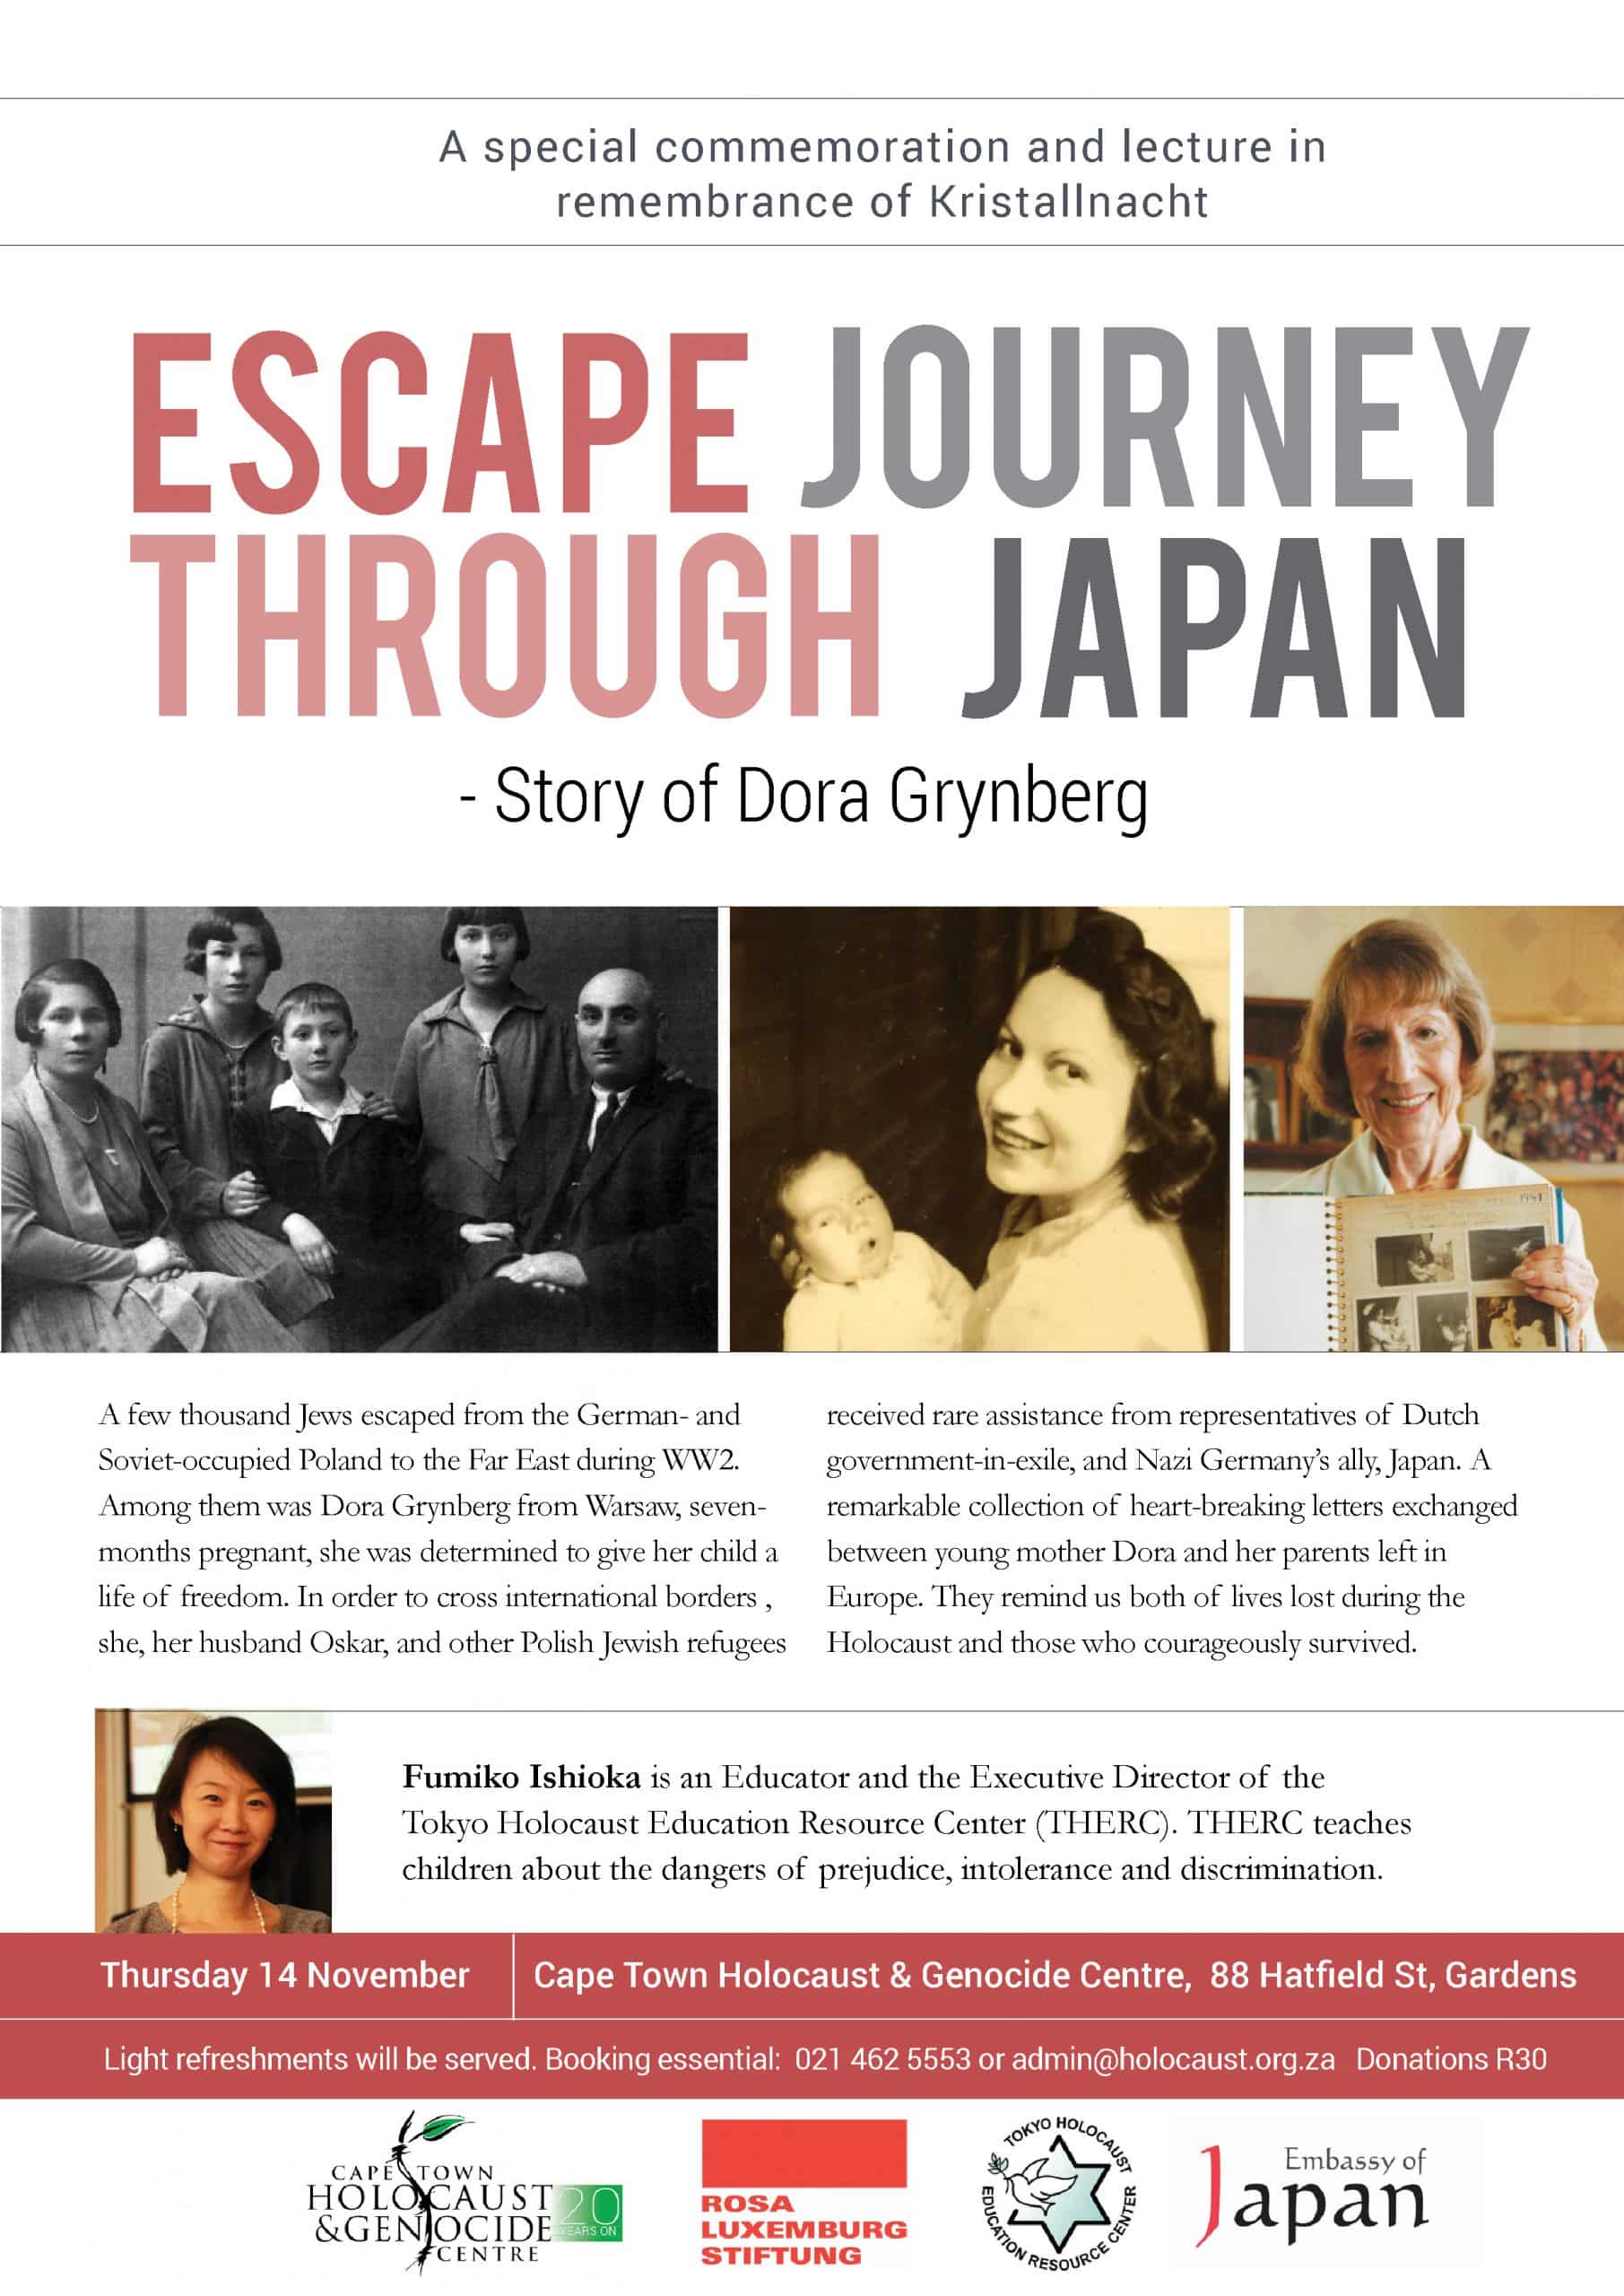 Escape Through Japan fumiko Ishioka CTHGC